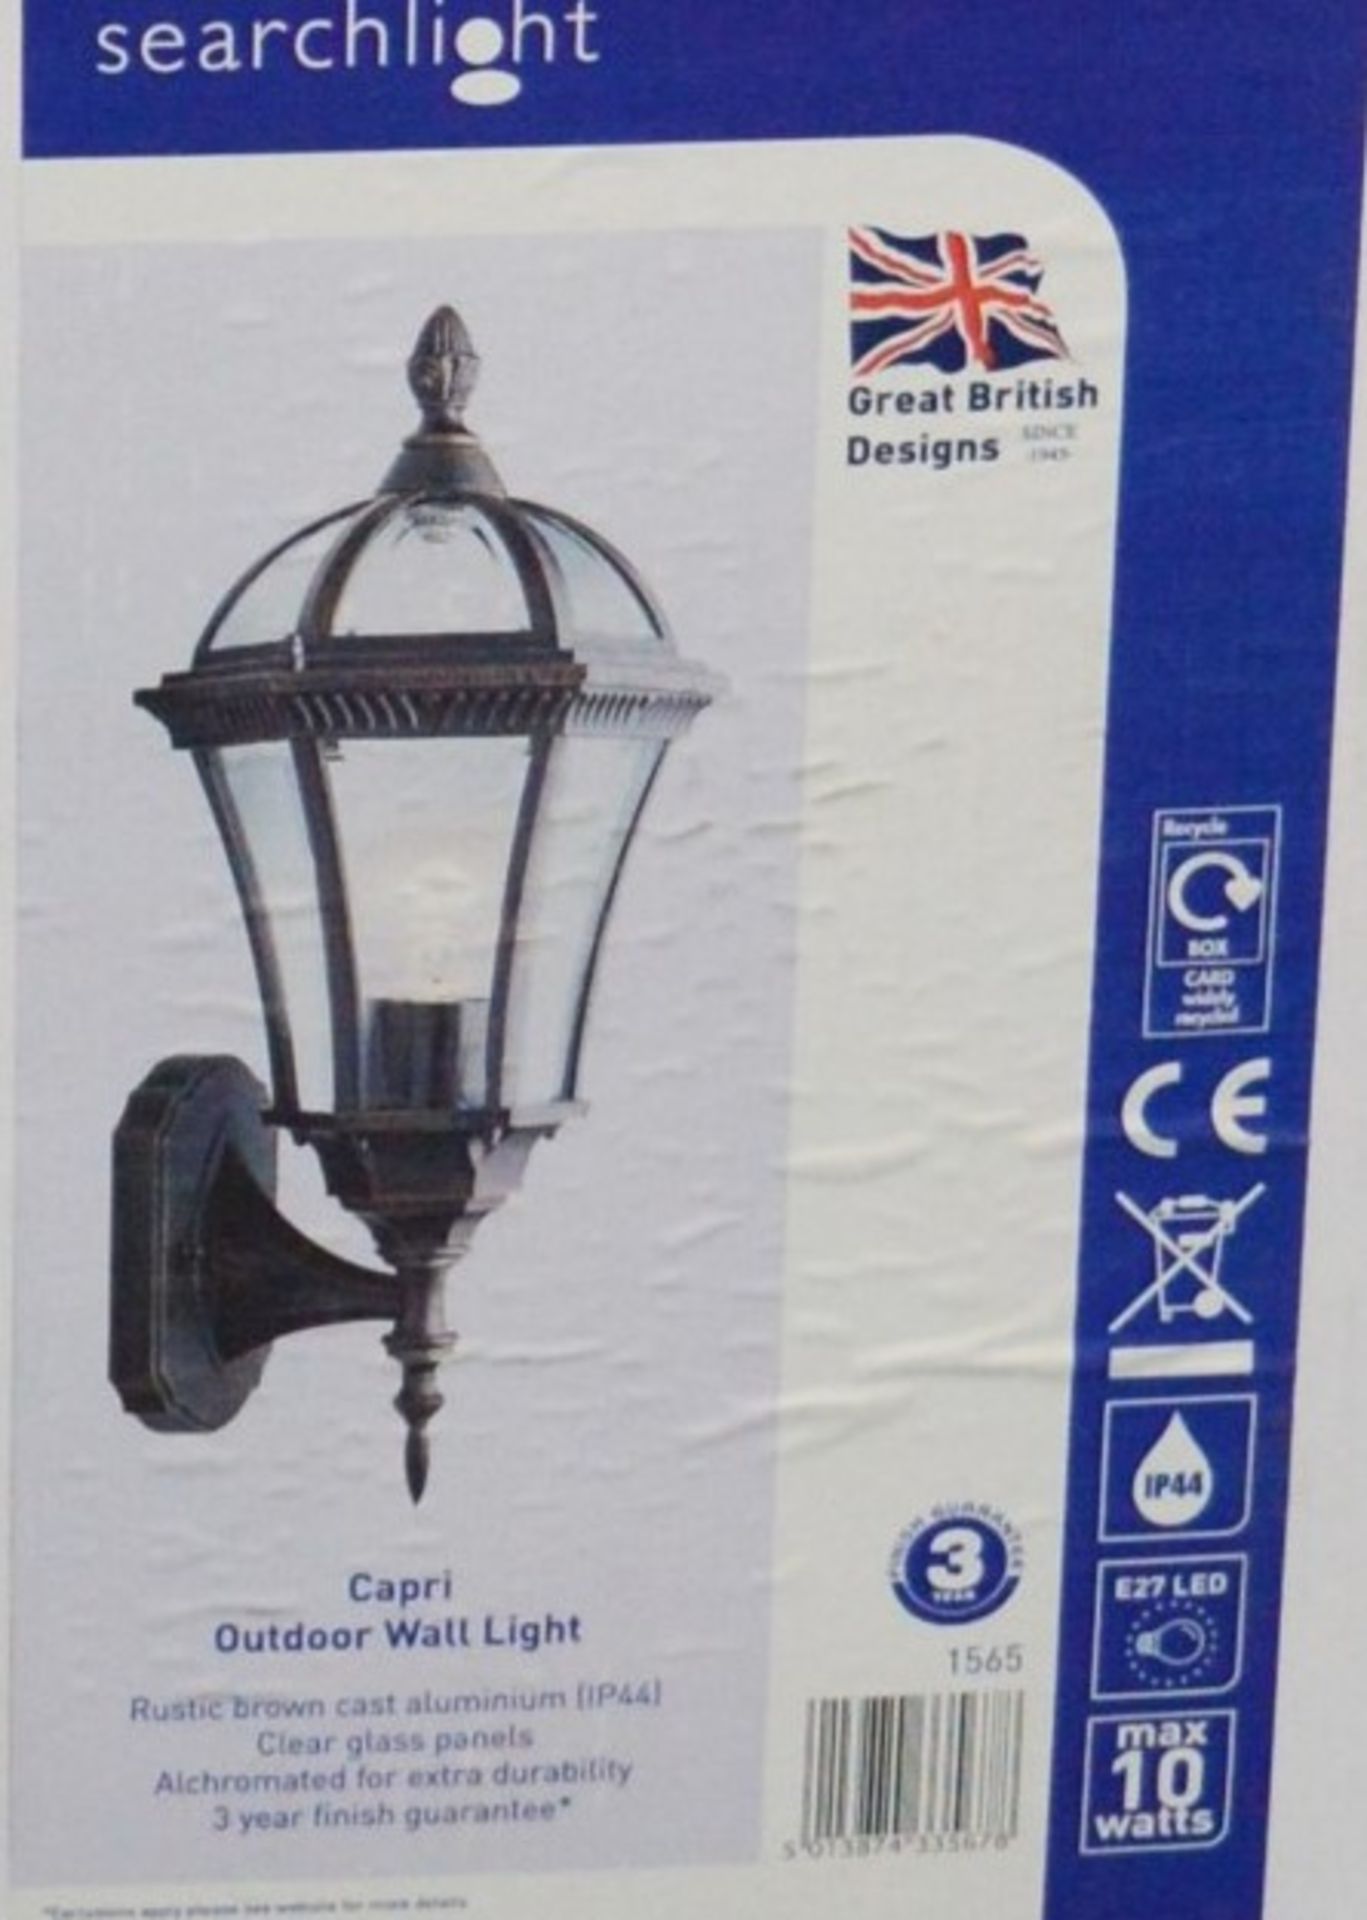 2 x Searchlight Capri Outdoor Wall Lights - Rustic Brown Cast Aluminium IP44 Product Code 1565 - New